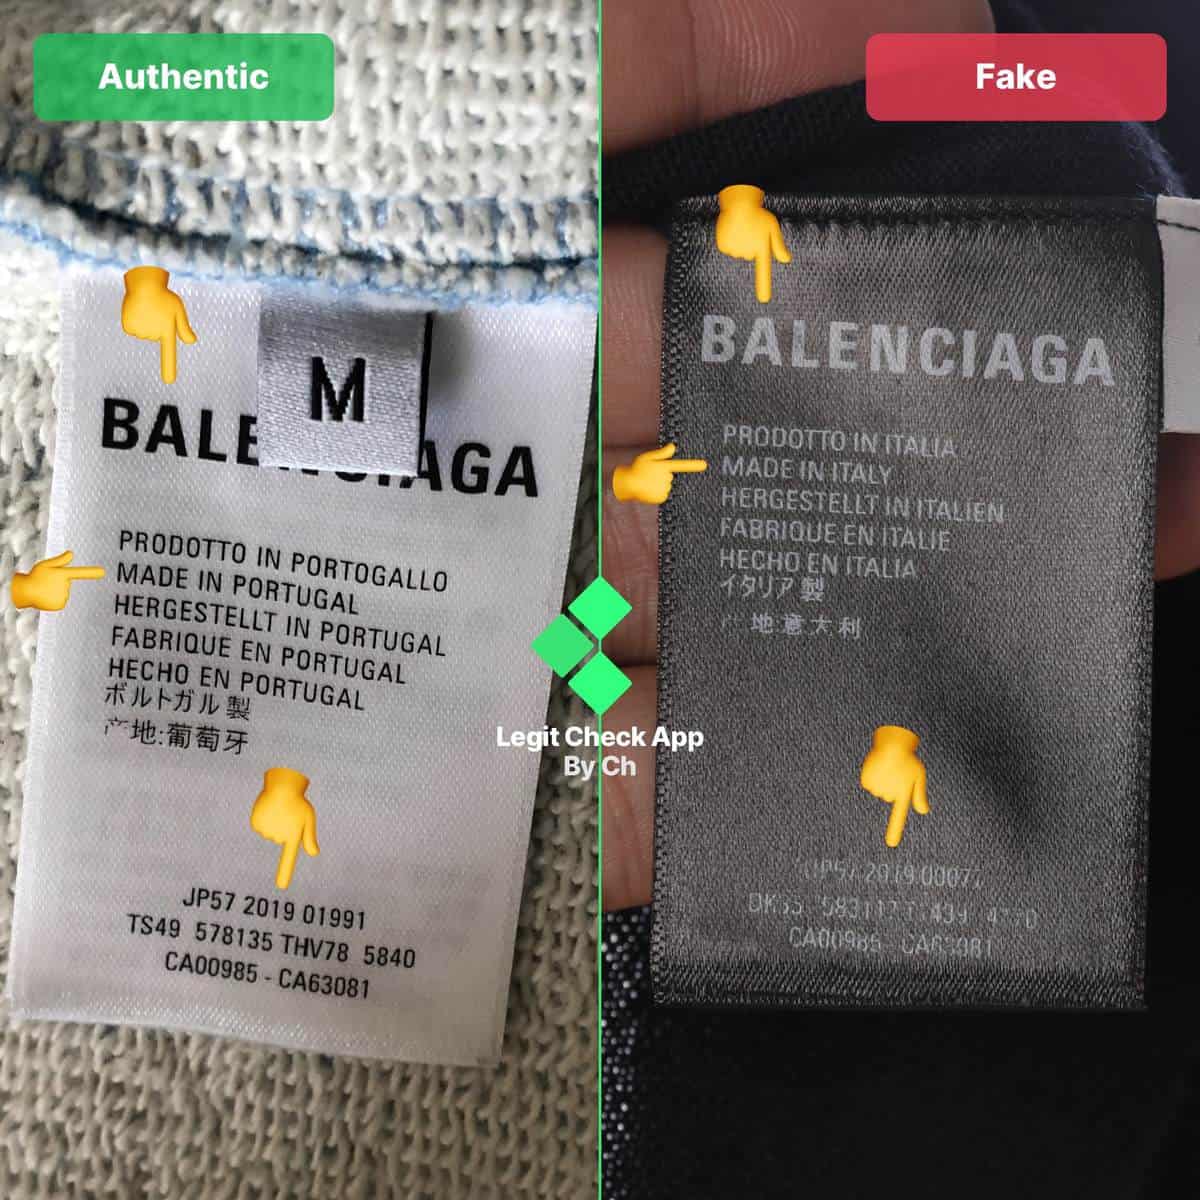 How To Spot Fake Balenciaga Hoodies (Any) - Legit Check By Ch